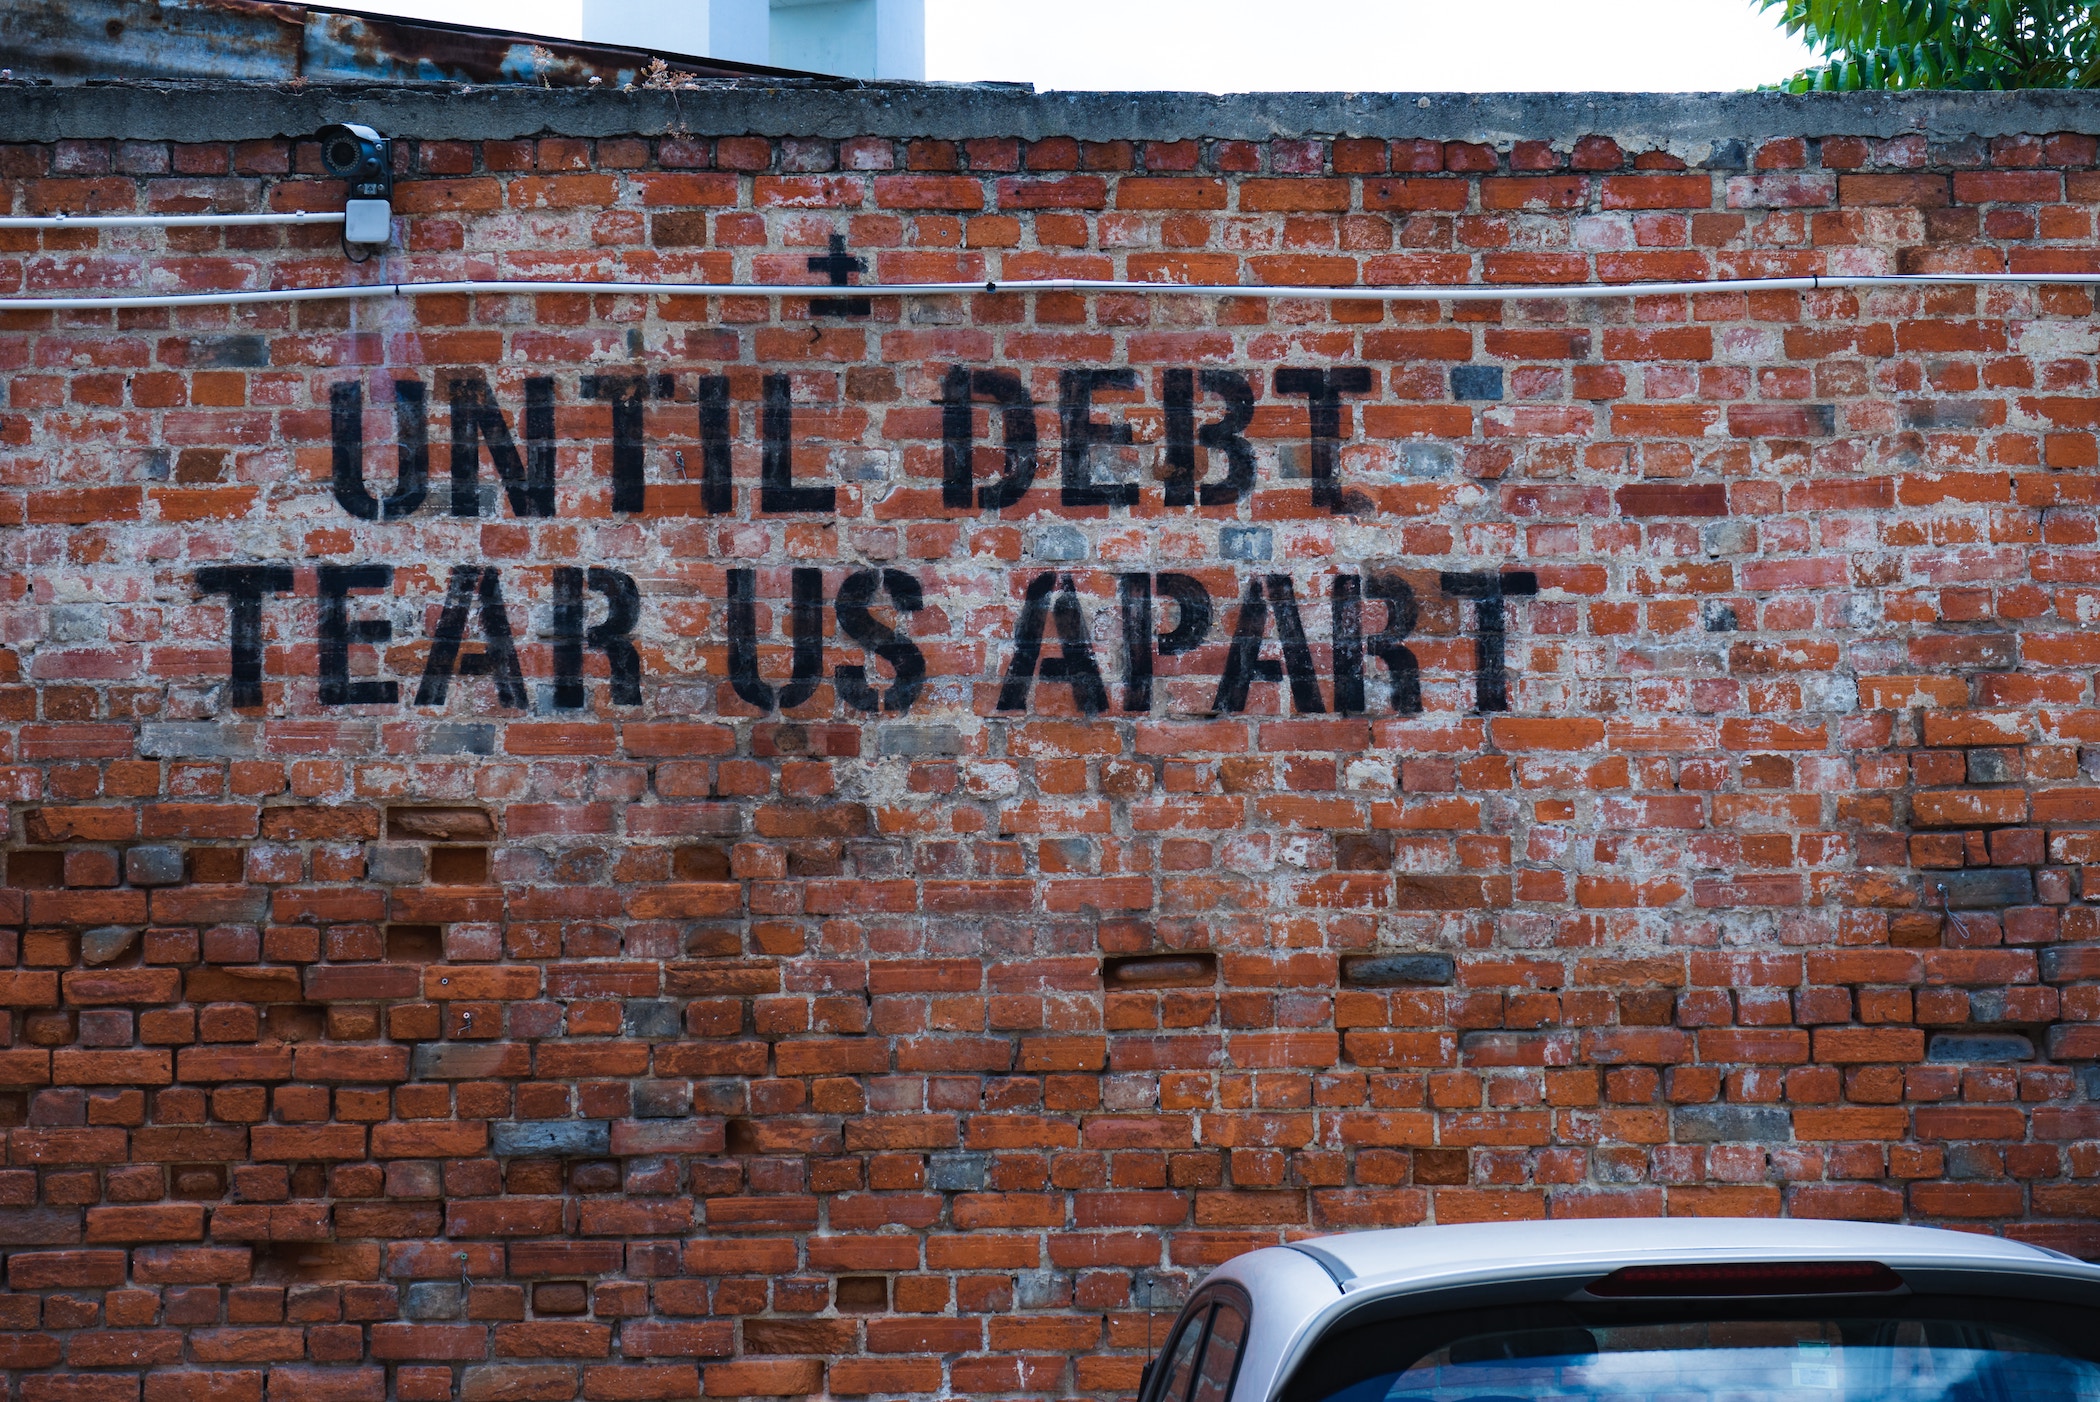 Mural 'until debt tear us apart' on brick wall